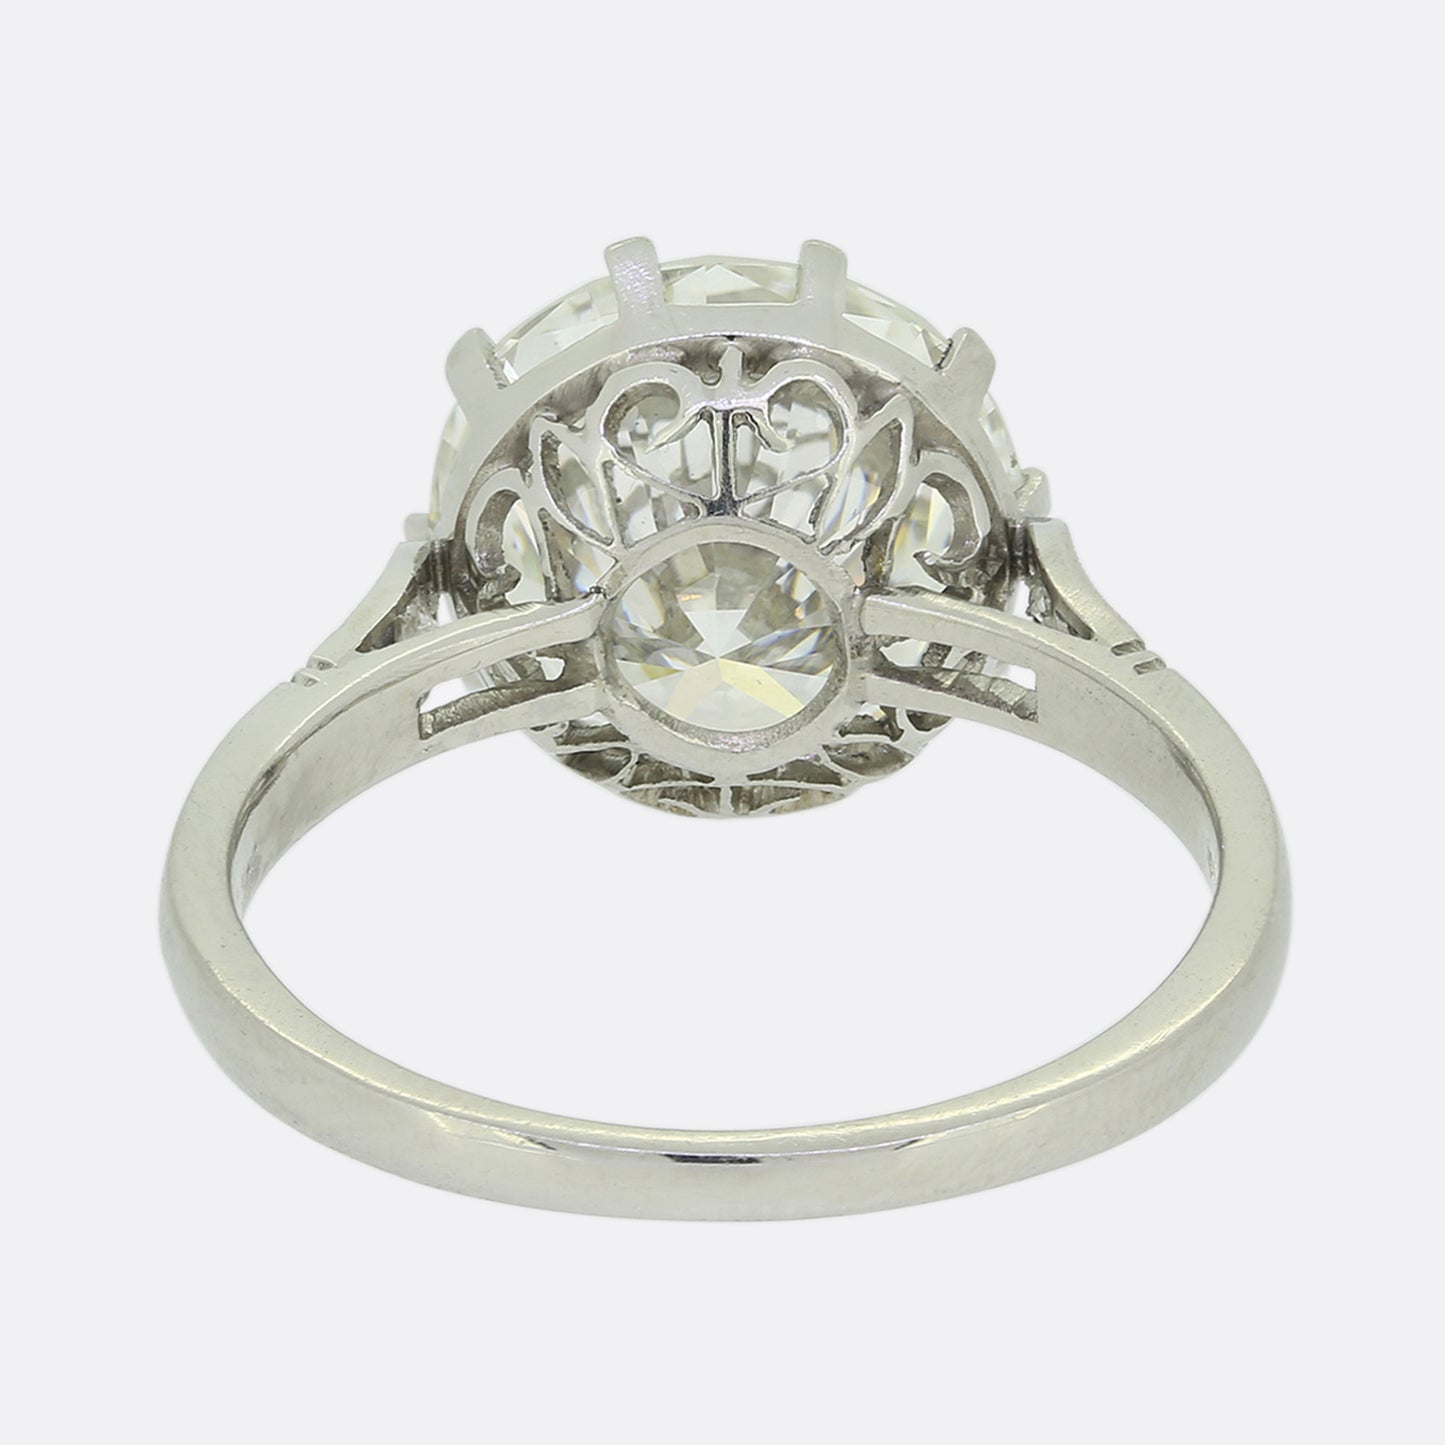 4.02 Carat Transitional Cut Diamond Solitaire Engagement Ring